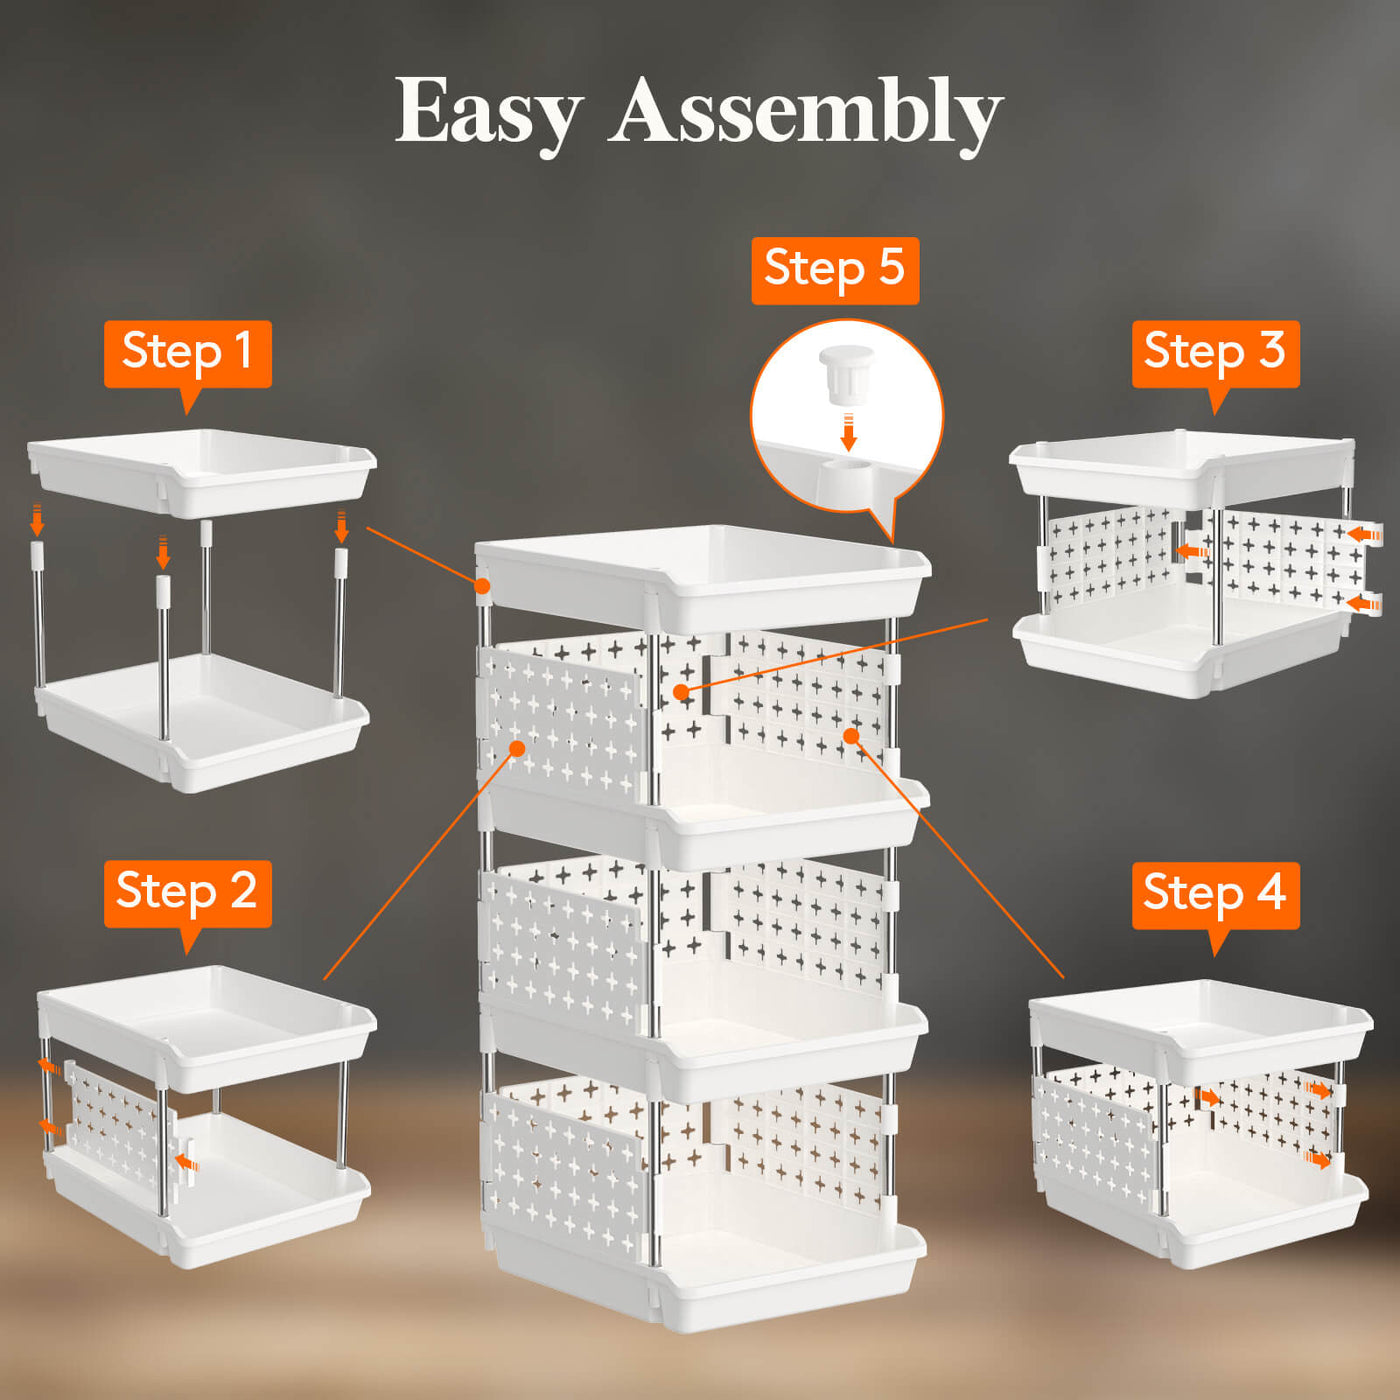 3-Pack Plastic Stackable Storage Bins, Gray Multi-functional Stacking Basket